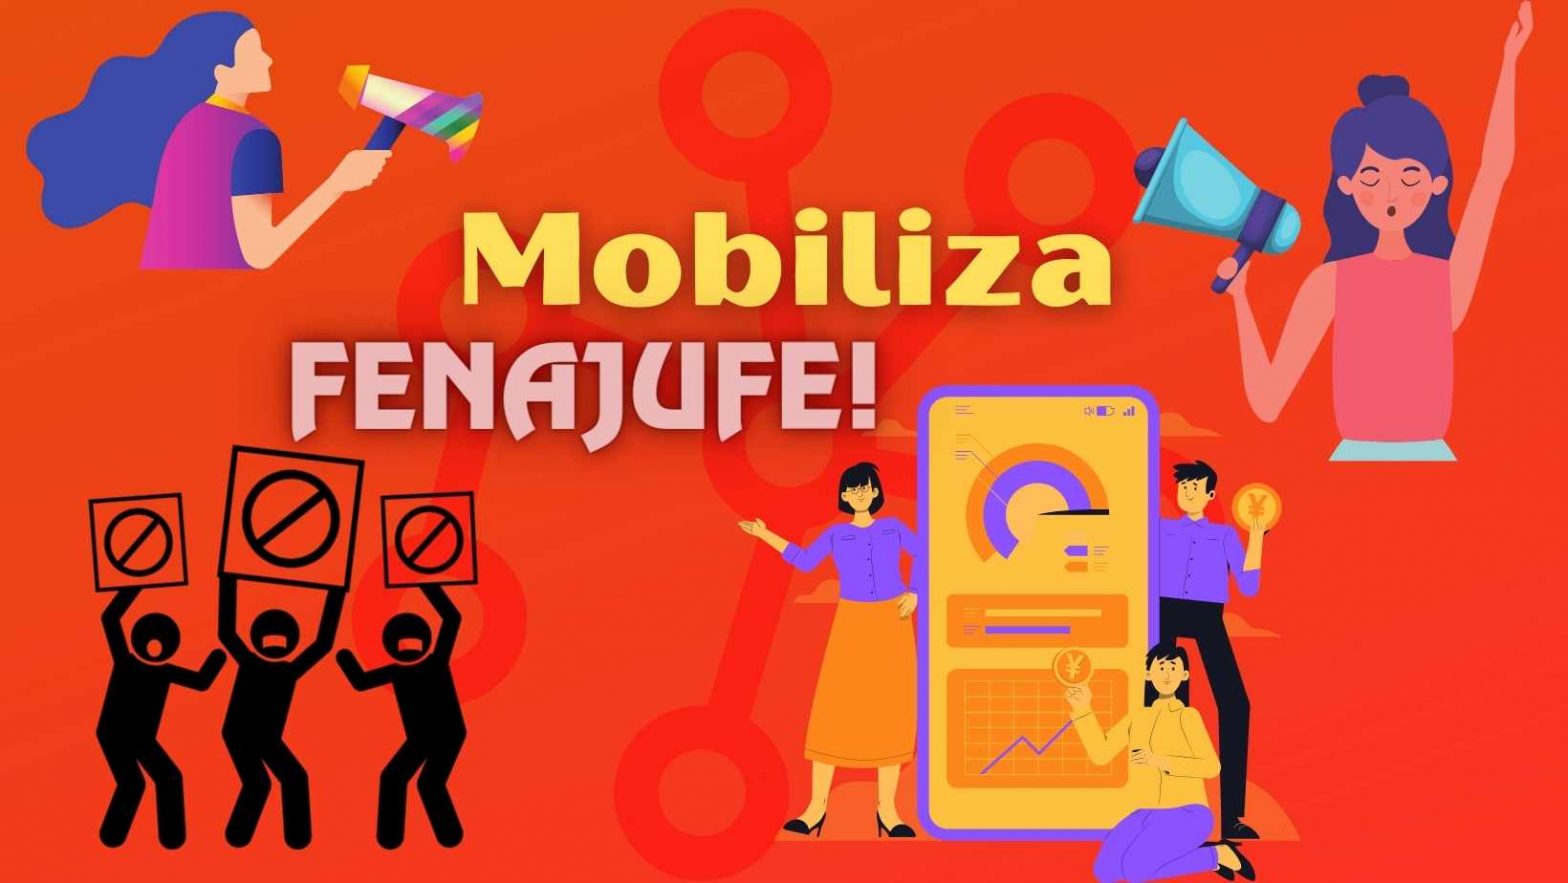 Reforma Administrativa: Federação apresenta Plataforma MobilizaFenajufe!, SISEJUFE